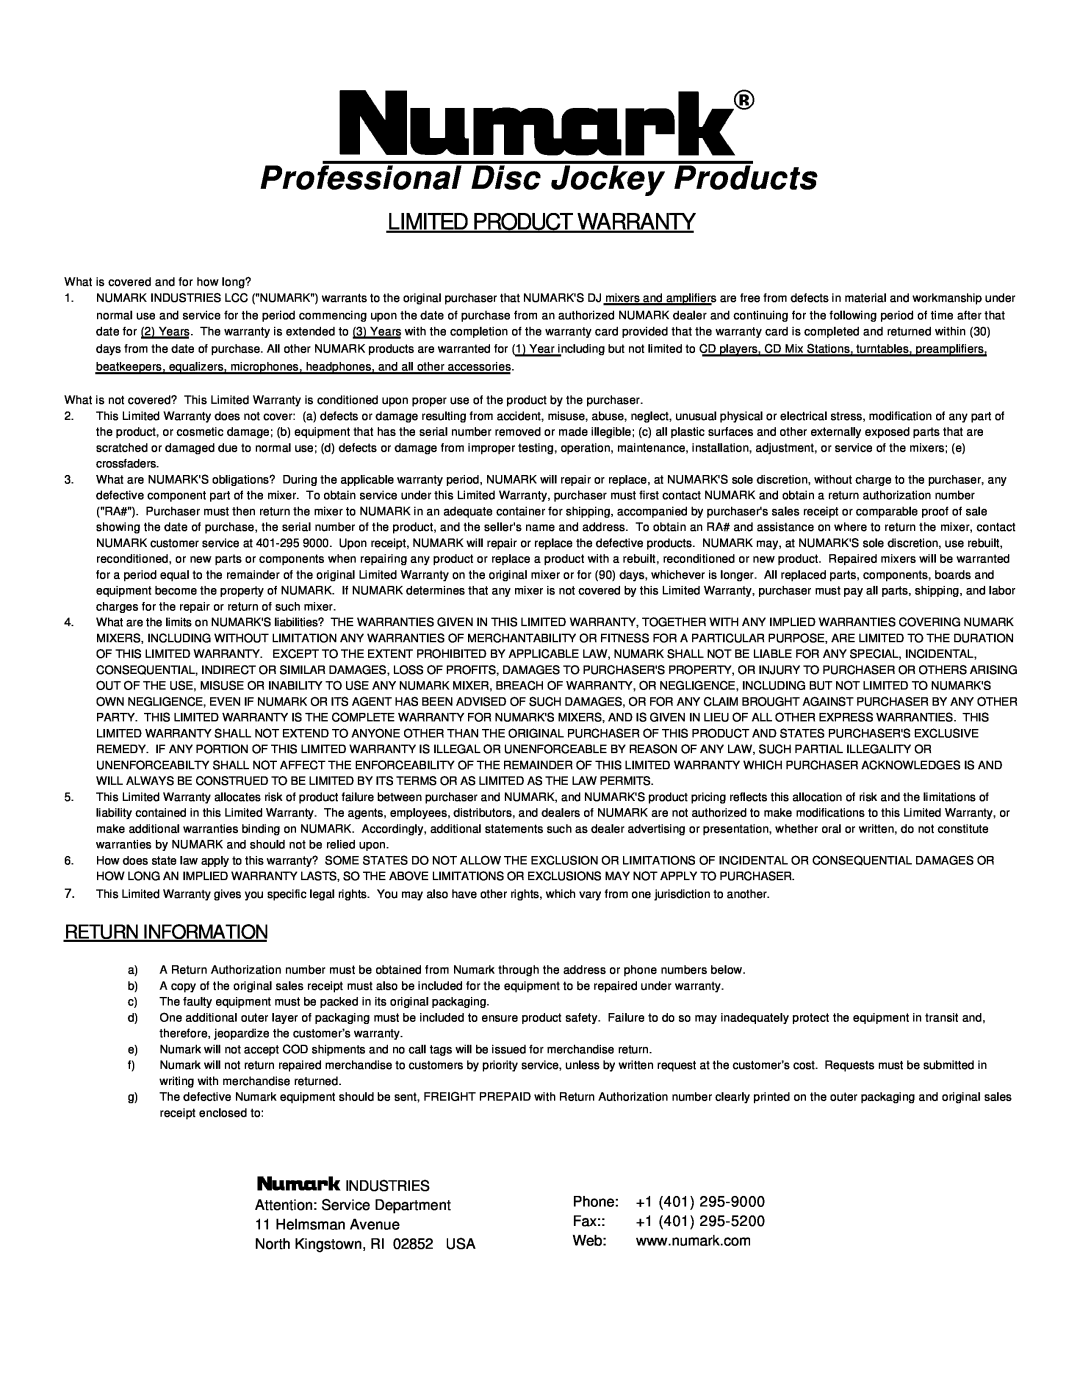 Numark Industries DM905 user manual Professional Disc Jockey Products, Limited Product Warranty, Return Information 